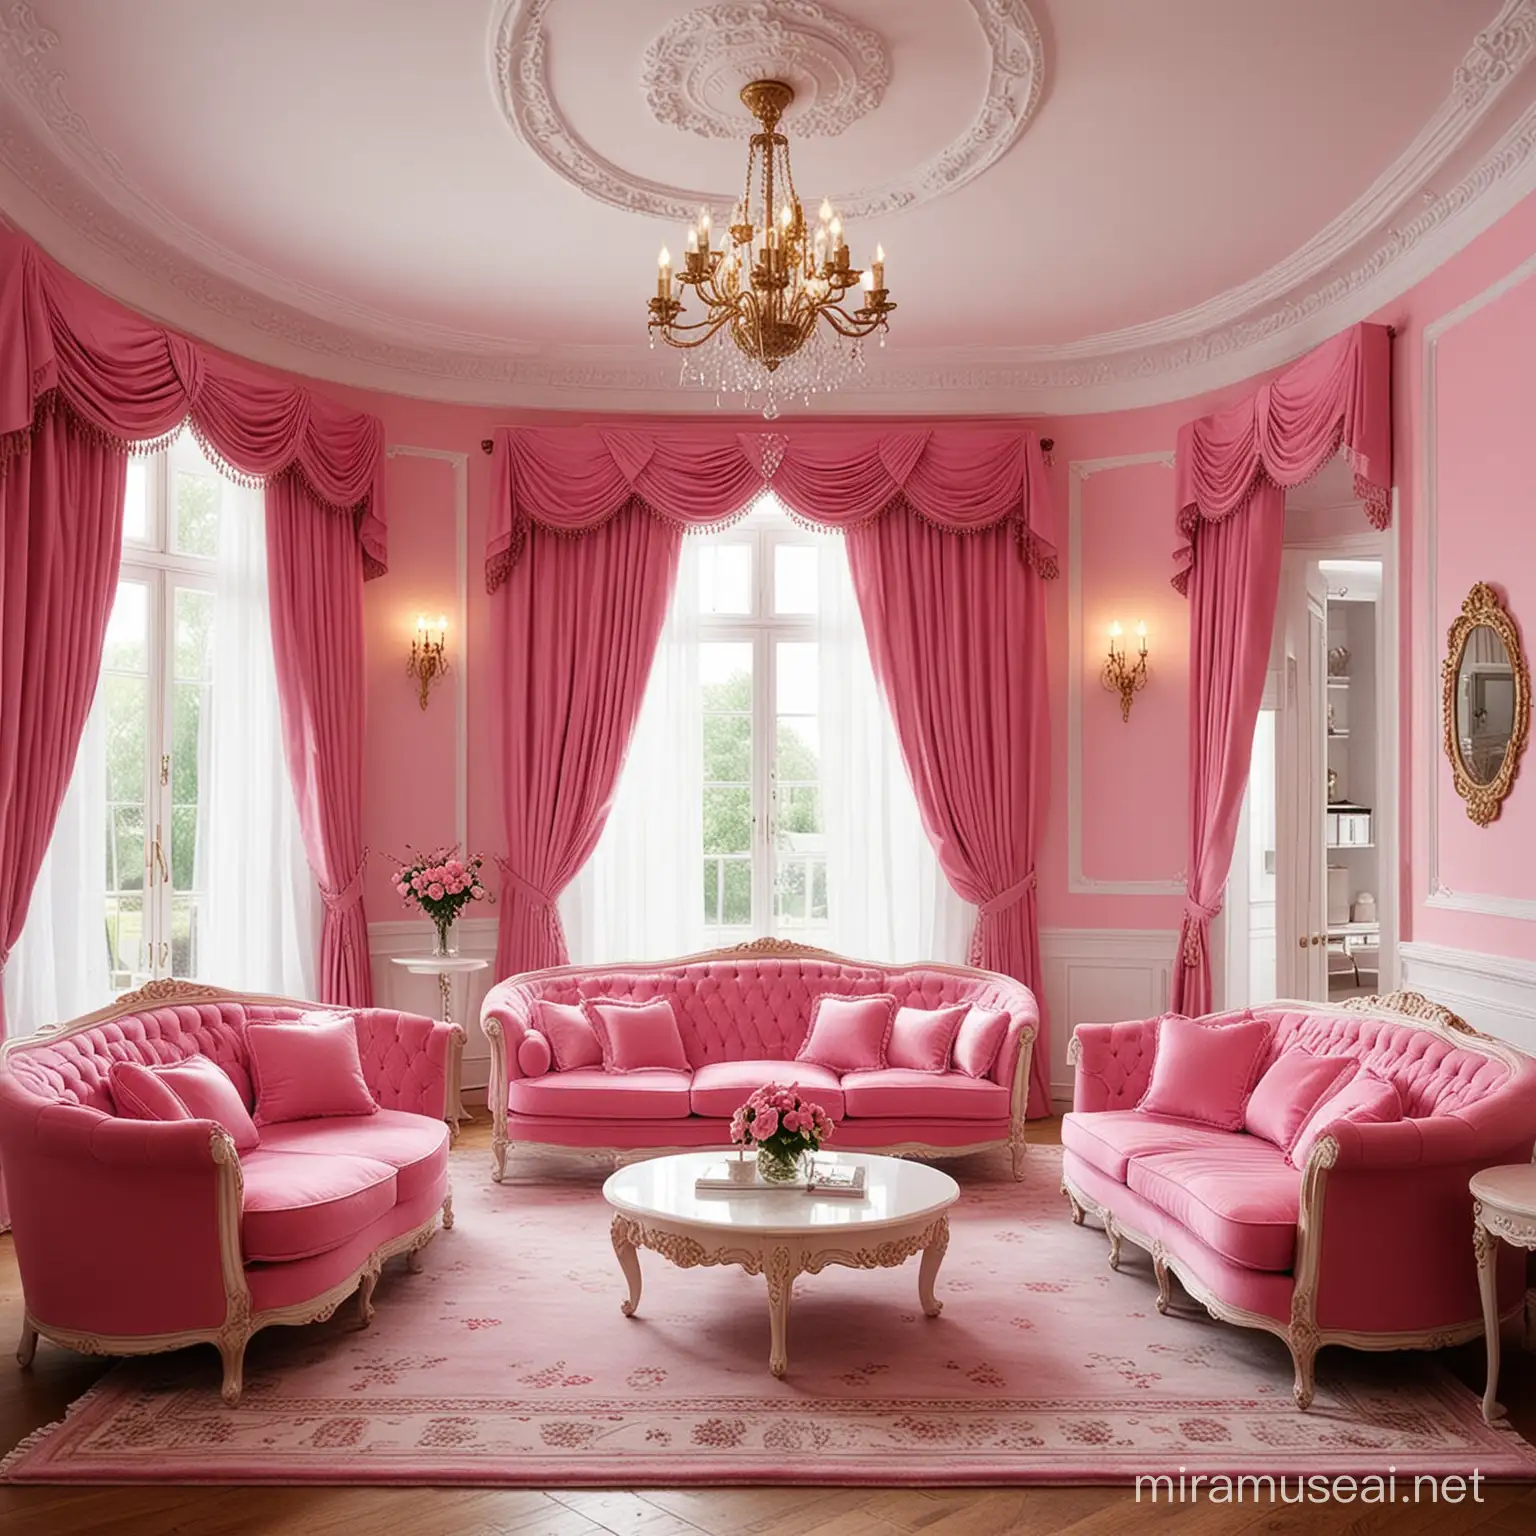 Interesting interior design
Living room
Pink classic
